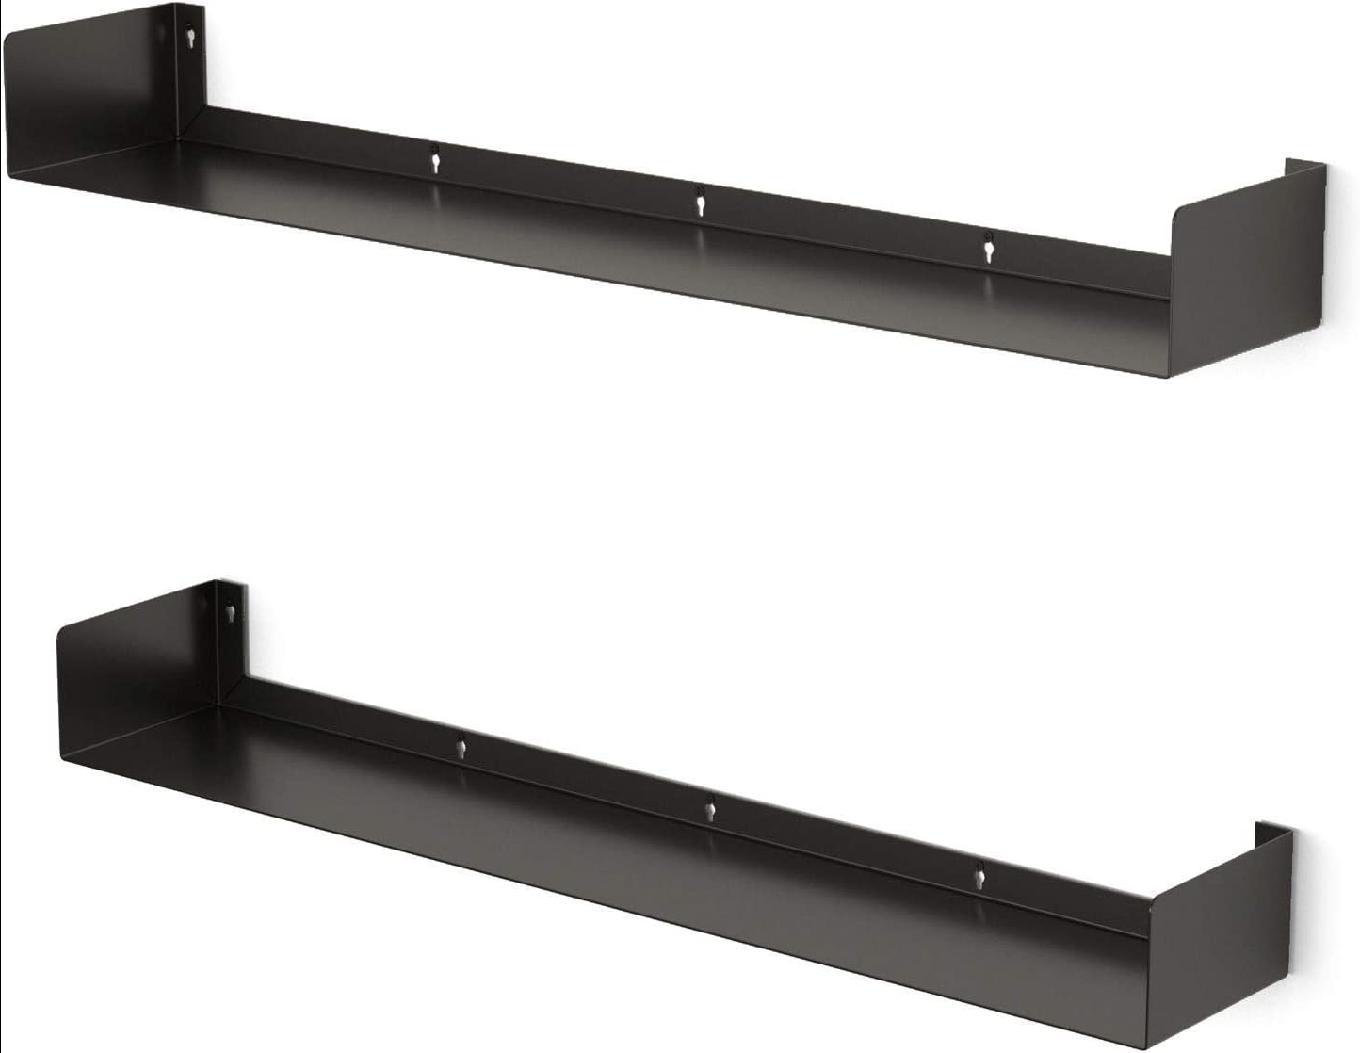 Stainless Steel Floating Shelf Latitude Run Size: 60